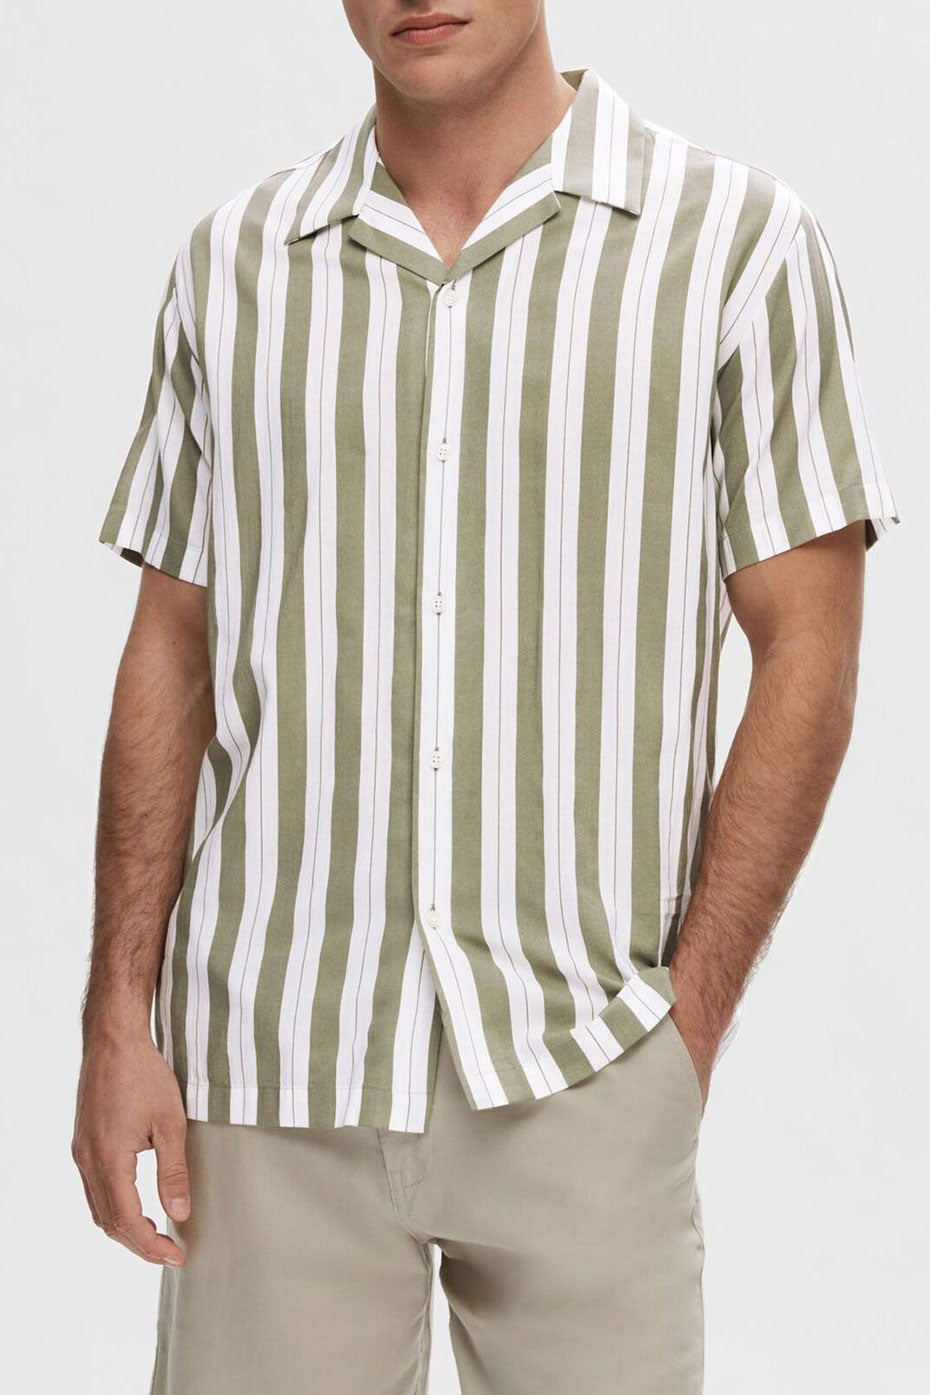 selected-homme-vetiver-stripes-reg-air-shirt